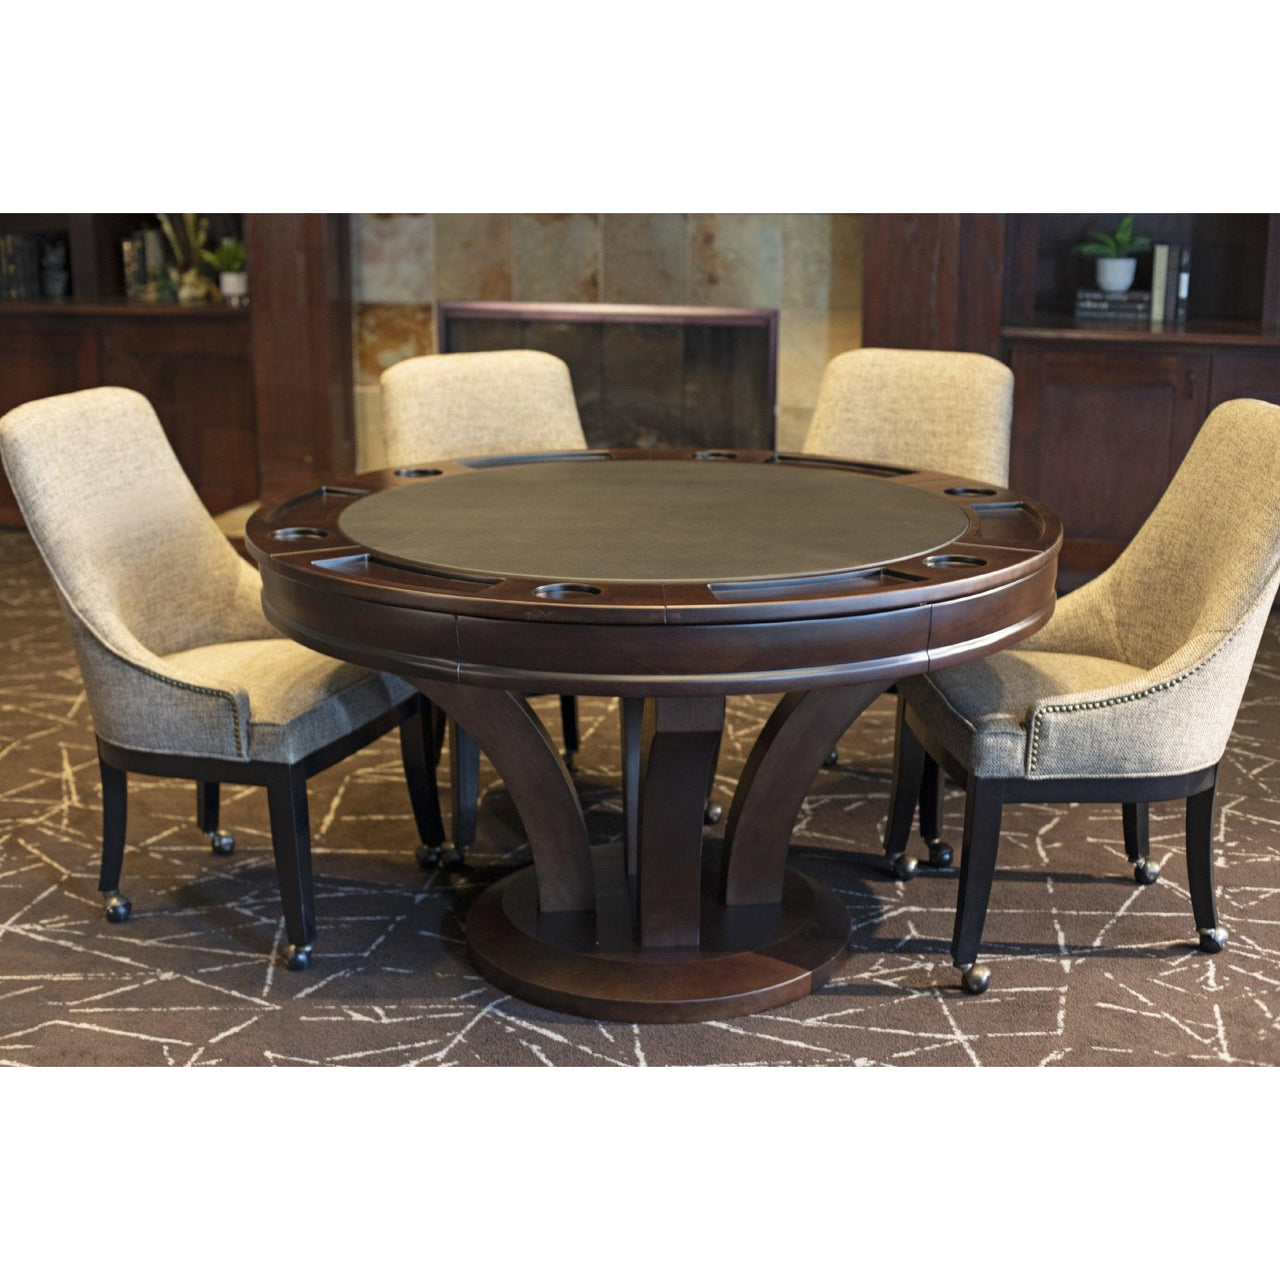 Presidential Billiards Convertible Poker & Dining Table Hamilton-AMERICANA-POKER-TABLES